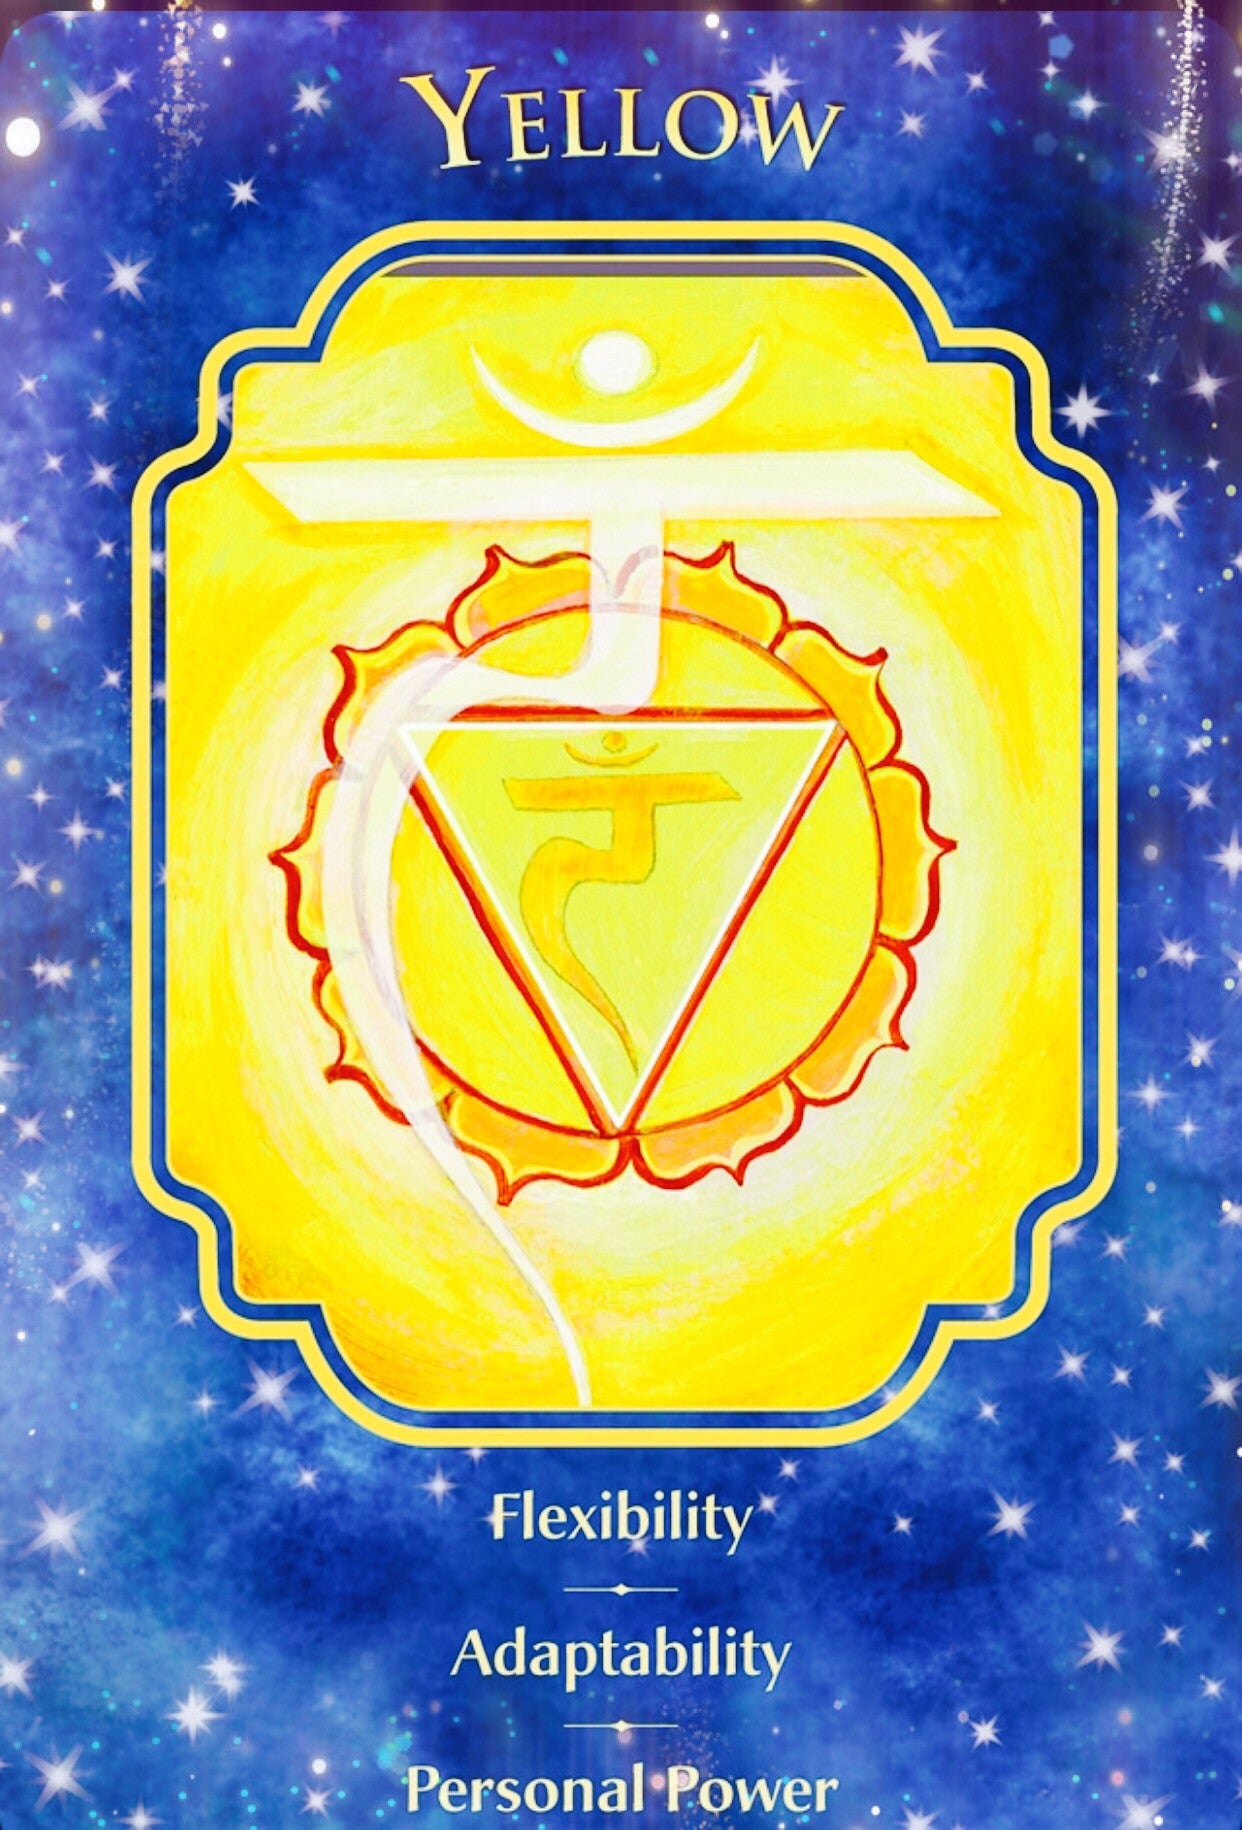 Yellow: “Flexibility ~ Adaptability ~ Personal Power.”